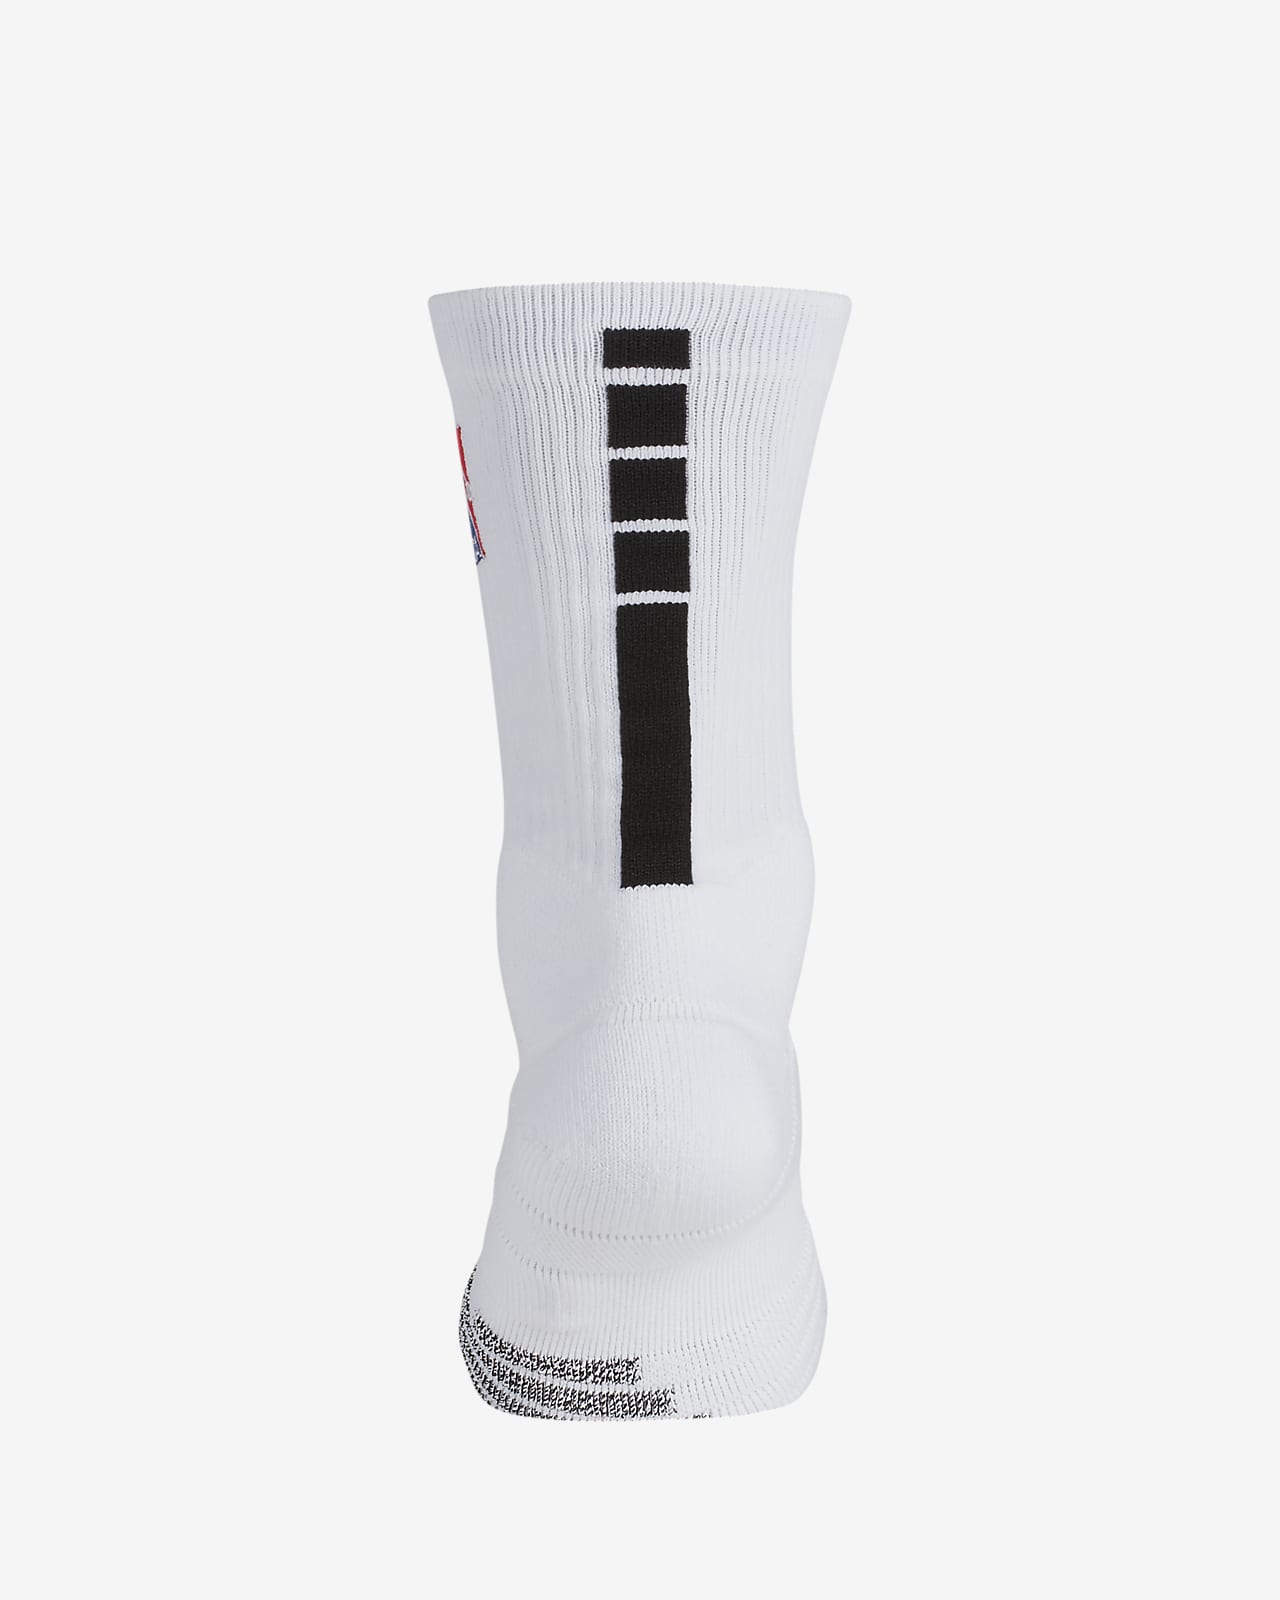 NikeGrip Quick Crew NBA Socks.